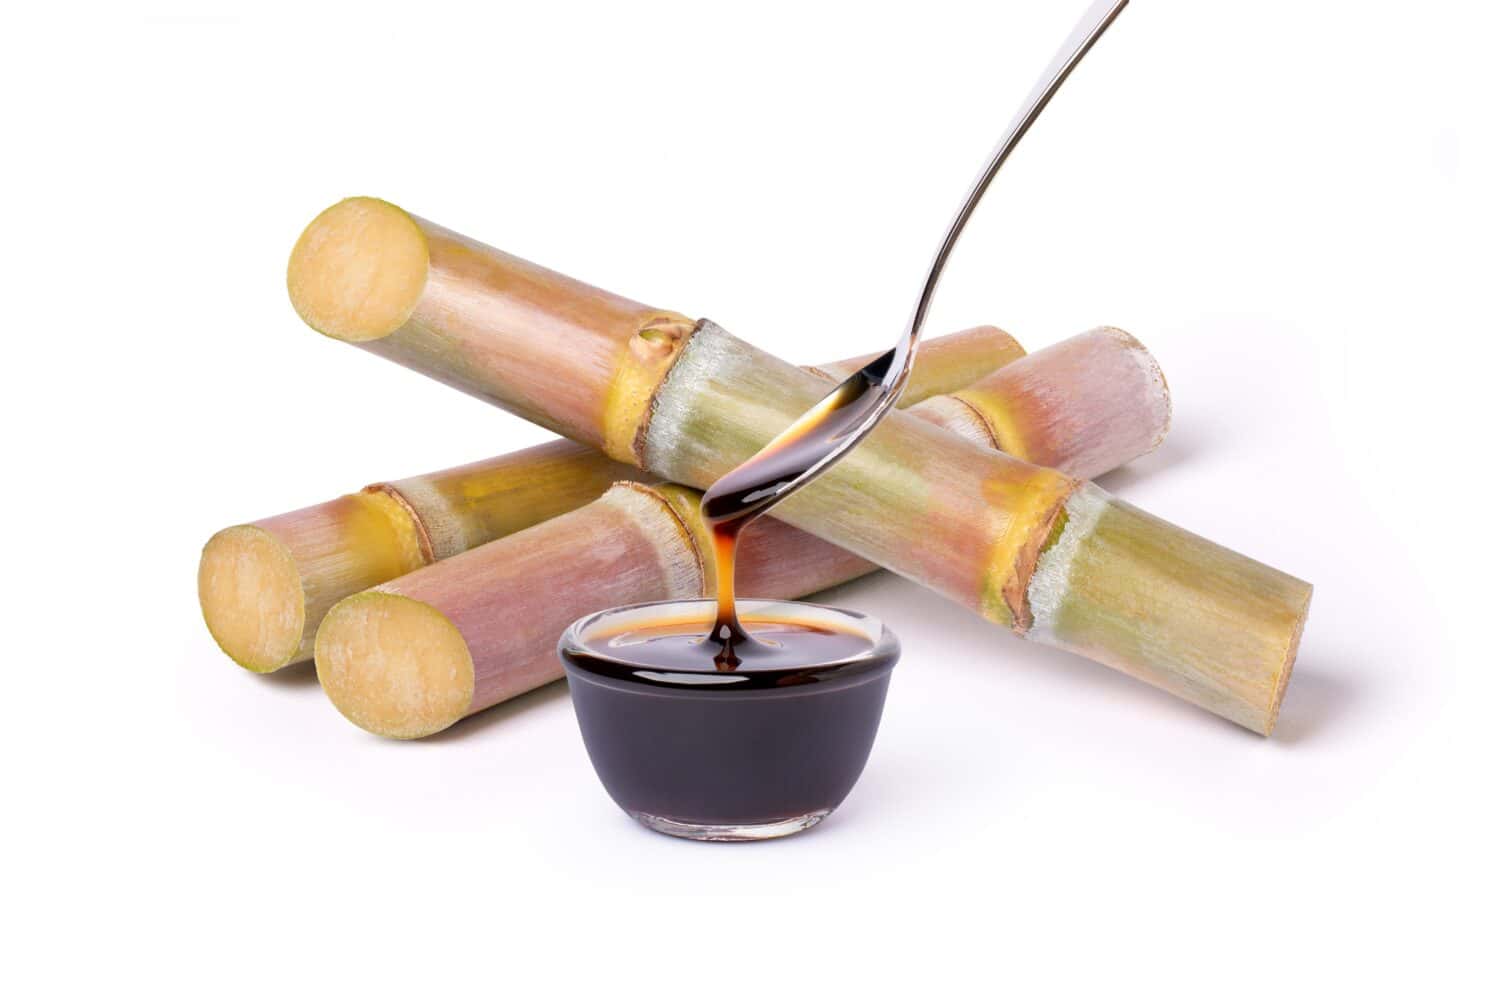 Sugar cane syrup molasses with fresh sugarcane isolated on white background.